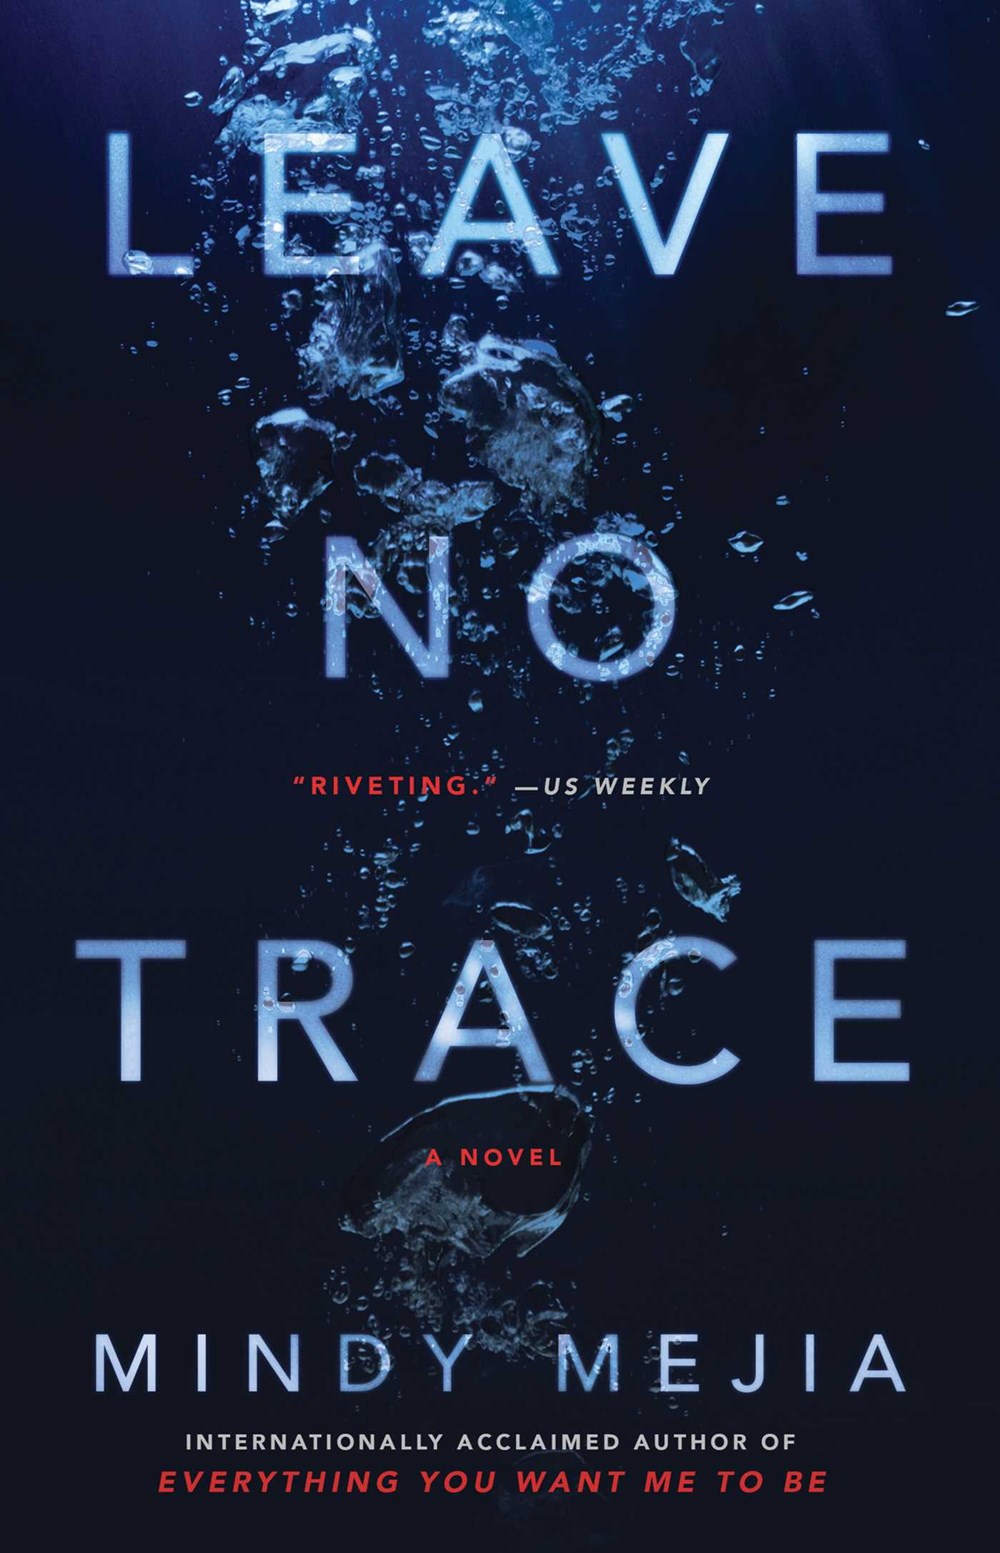 Leave No Trace: A Novel